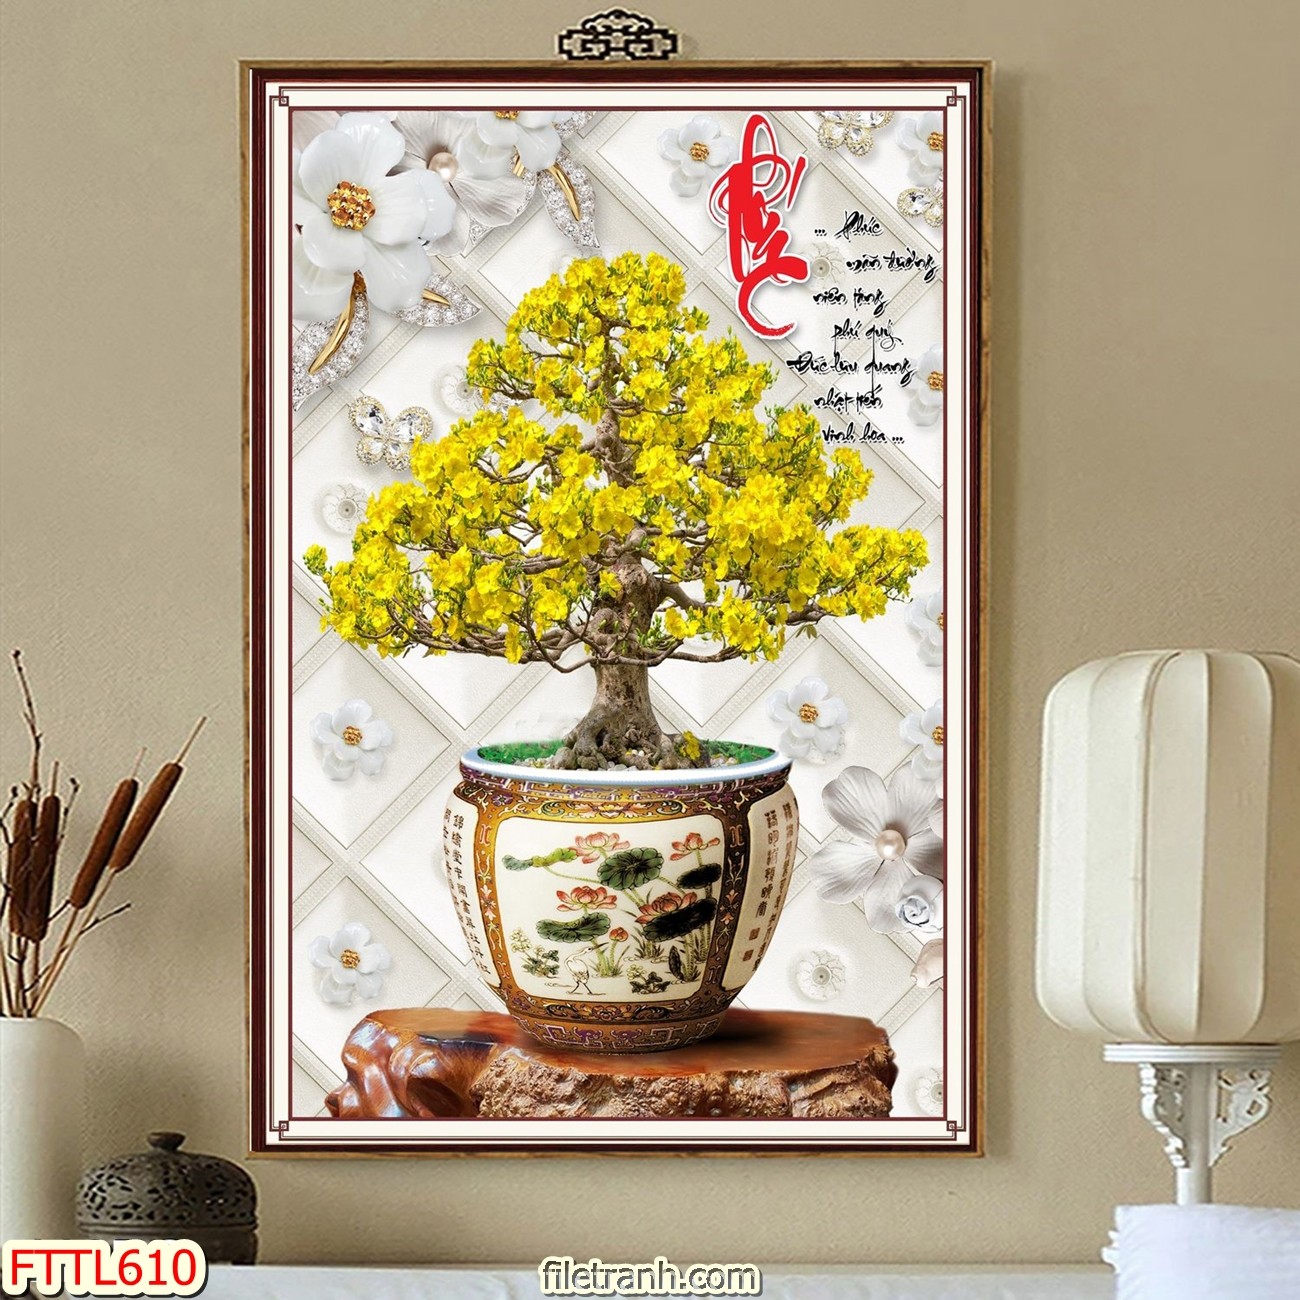 https://filetranh.com/file-tranh-chau-mai-bonsai/file-tranh-chau-mai-bonsai-fttl610.html